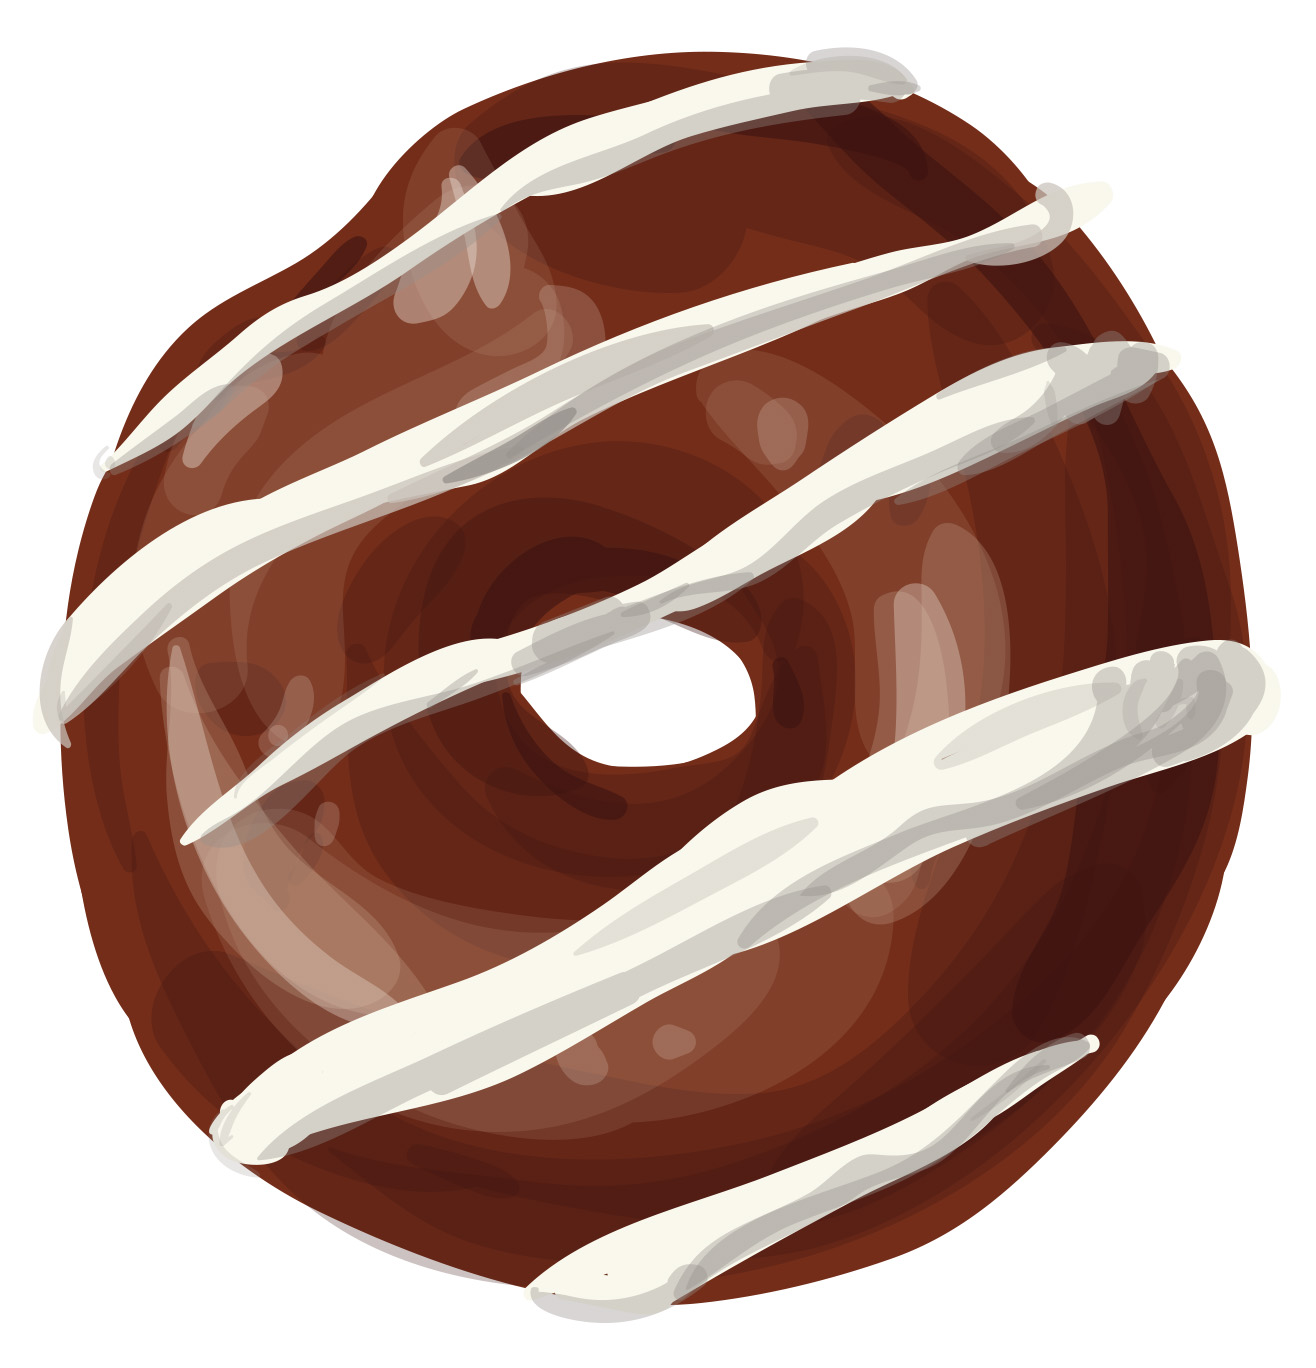 donut studio image